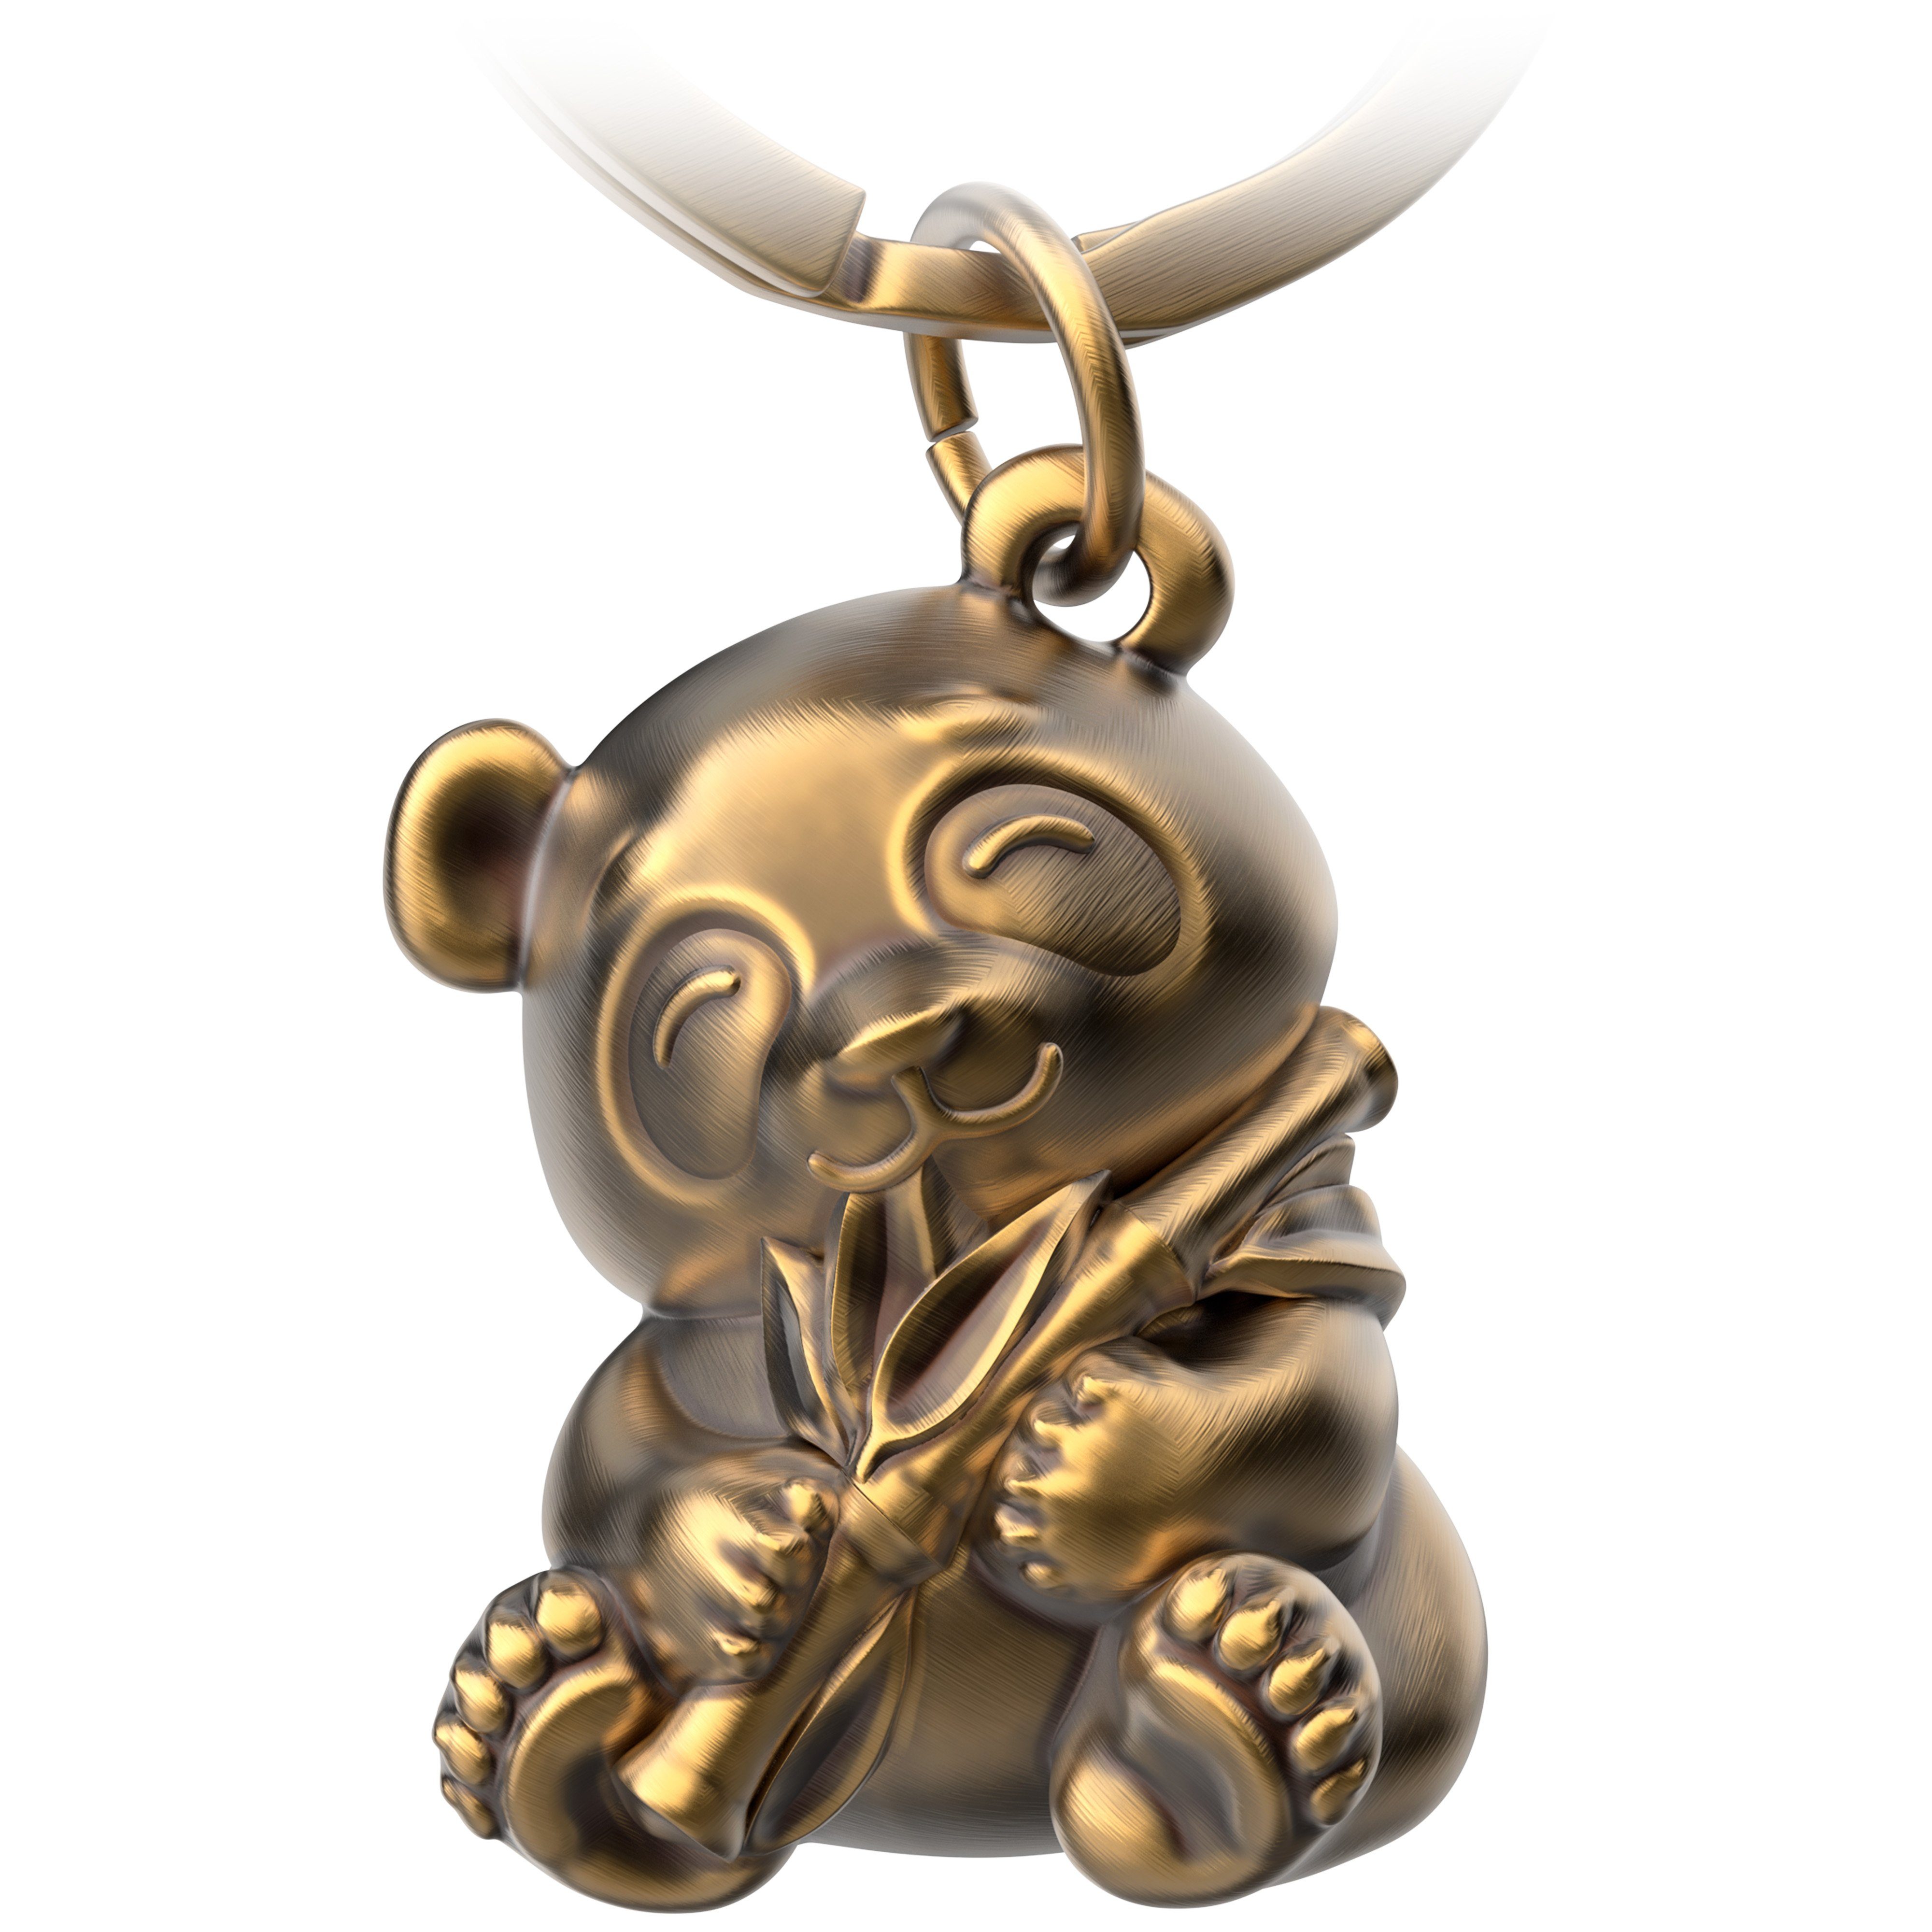 FABACH Schlüsselanhänger Panda Bär "Tao" - Glücksbringer Geschenk für Panda Bär Liebhaber Antique Bronze